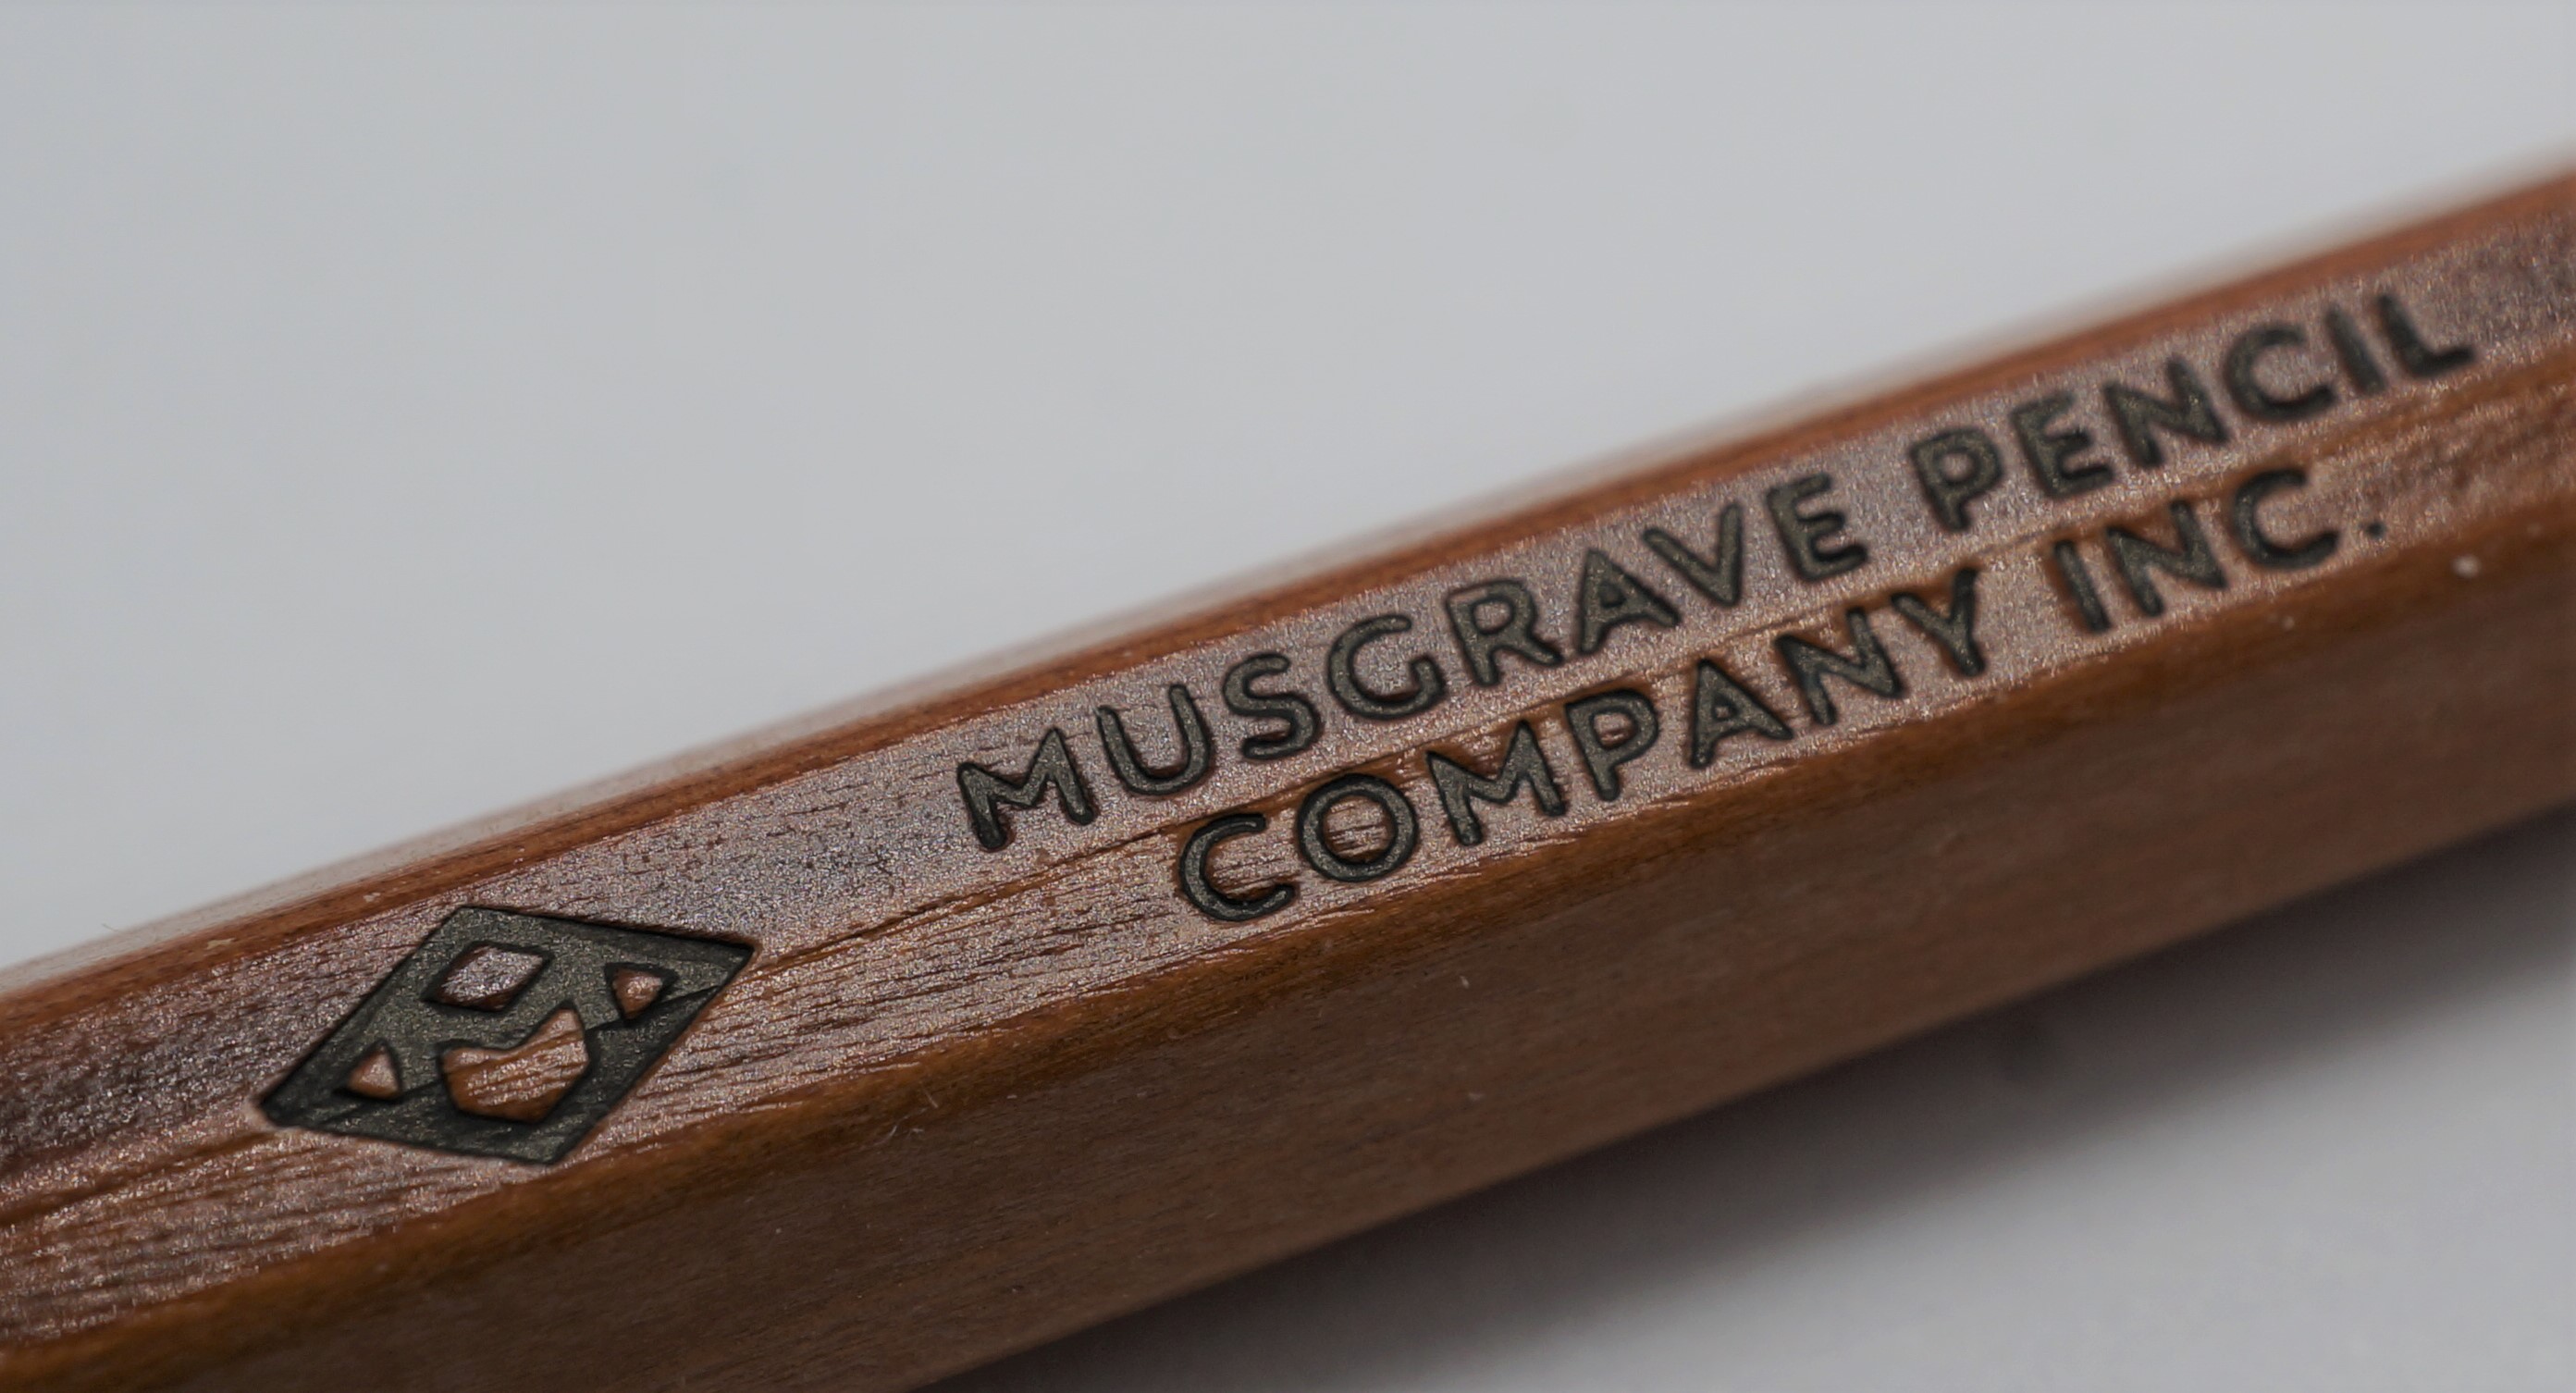 Musgrave Single Barrel 106 pencil